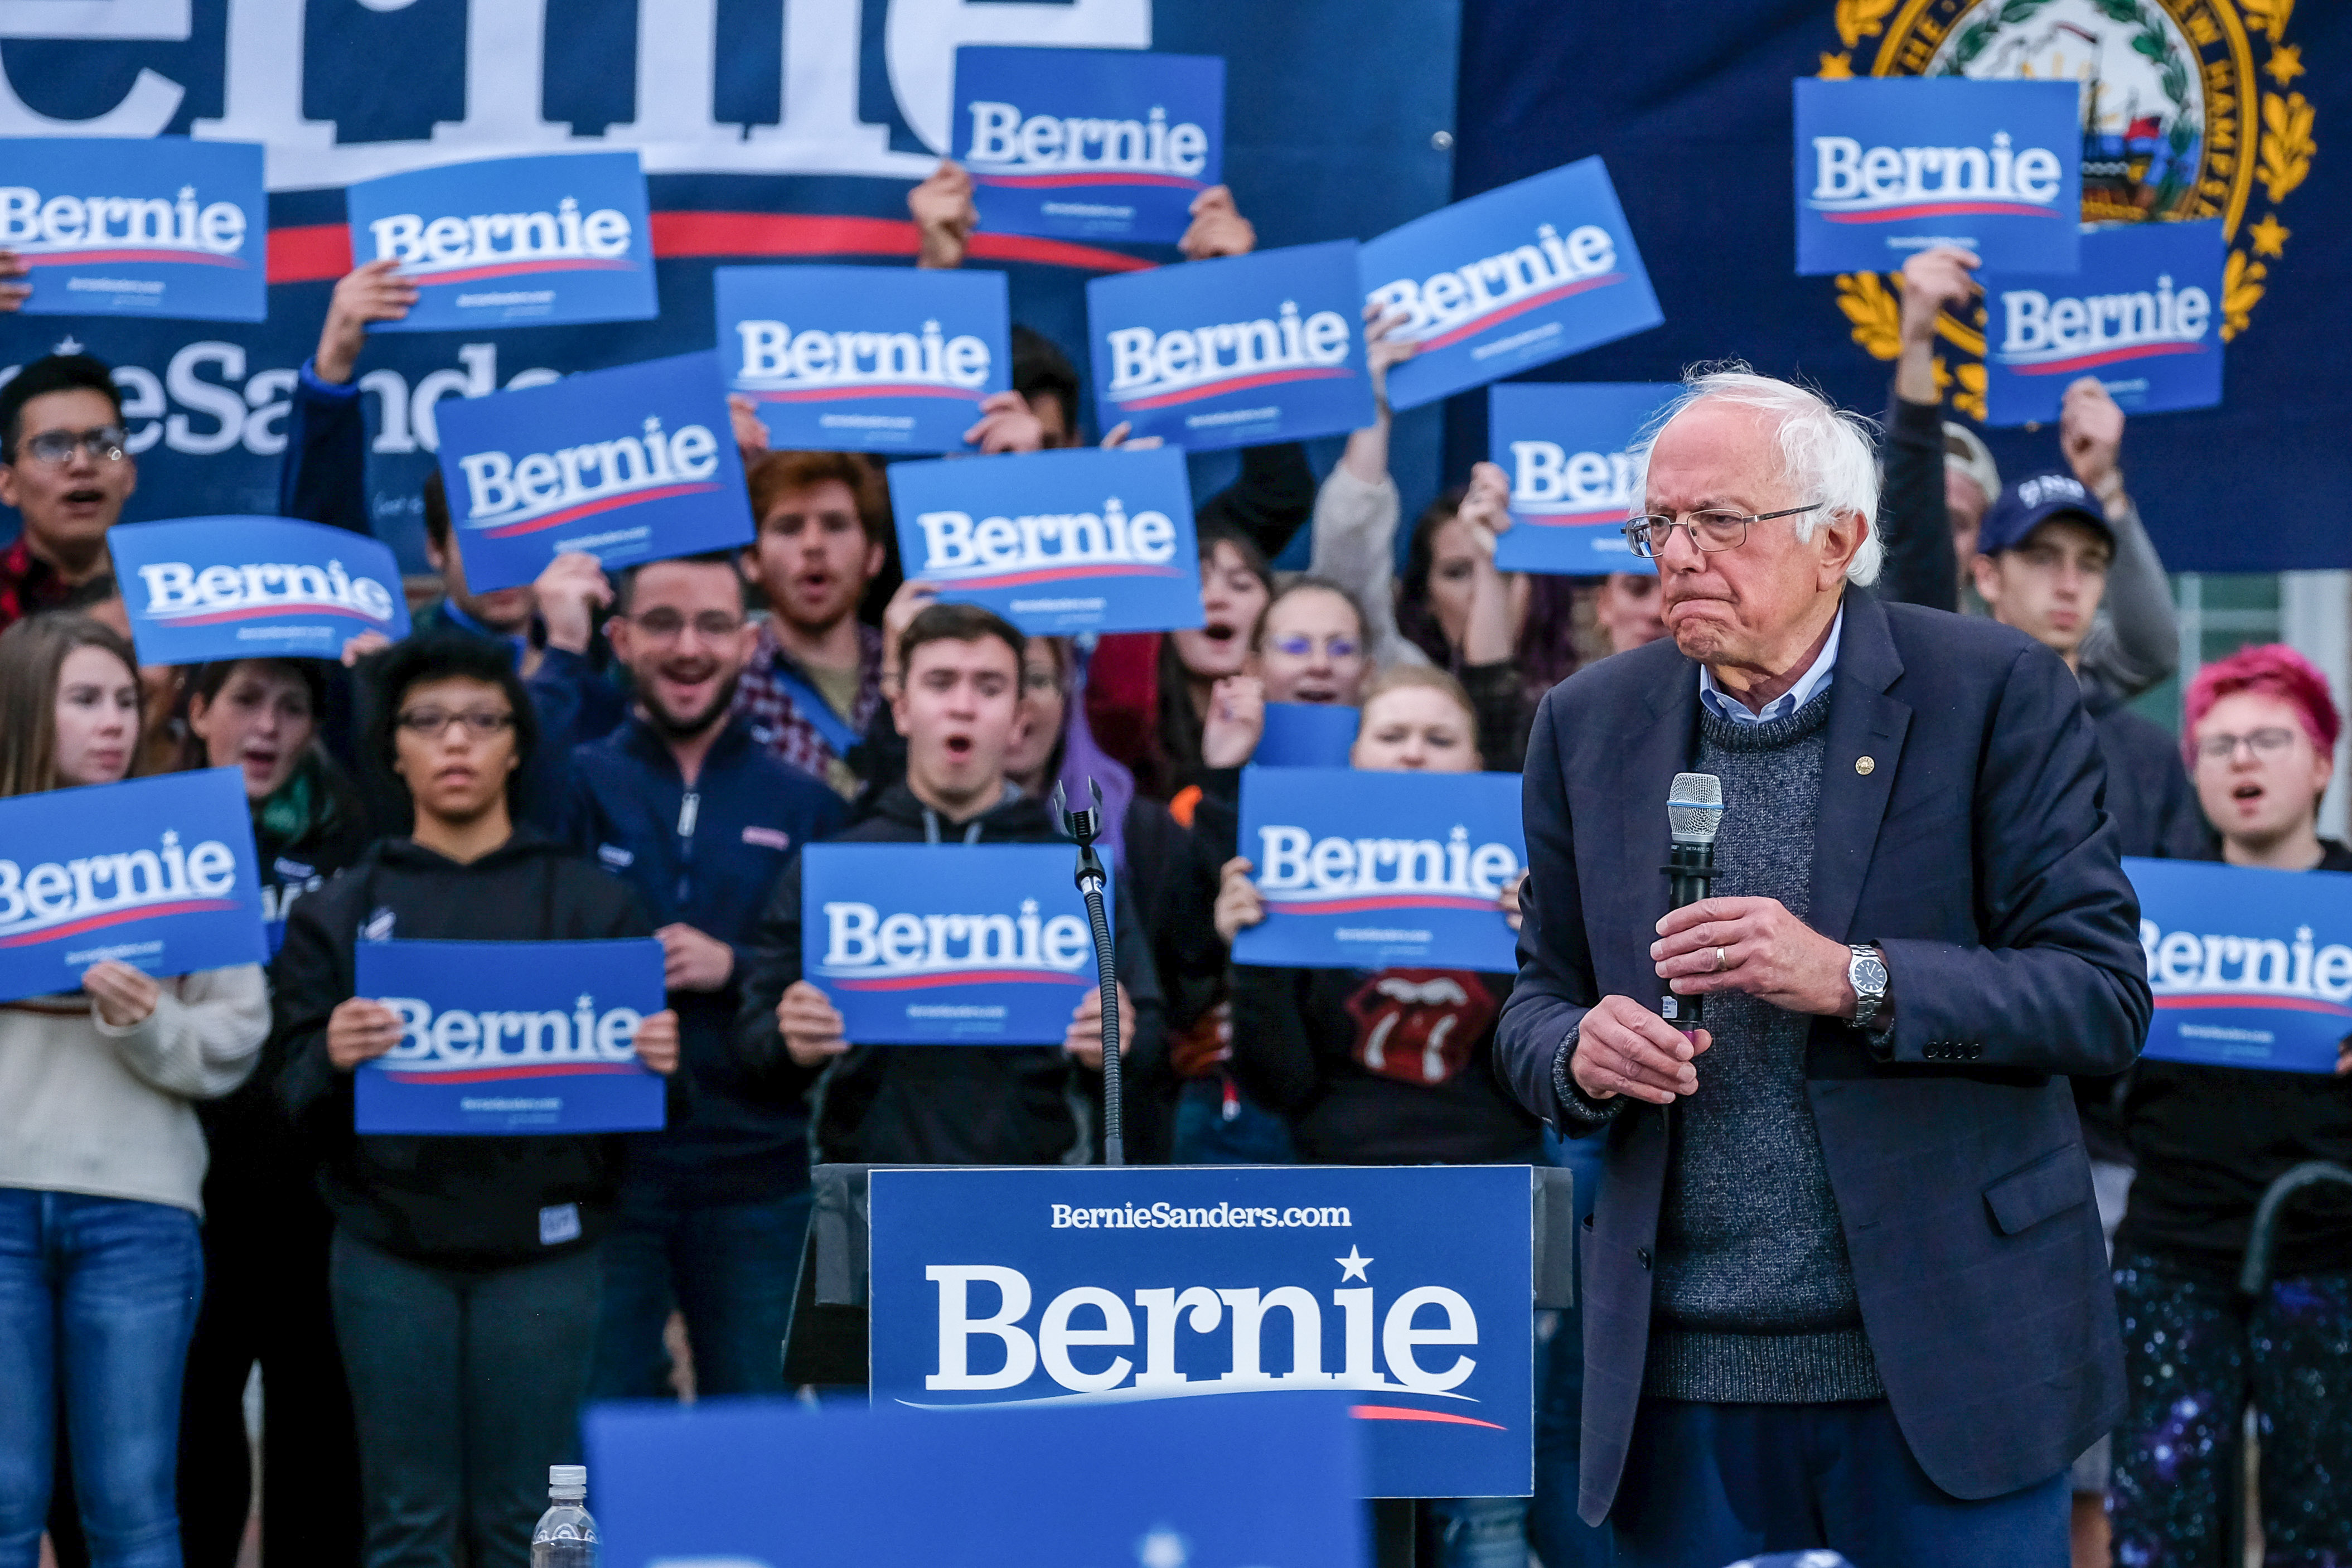 Vermont senator and presidential candidate Bernie Sanders